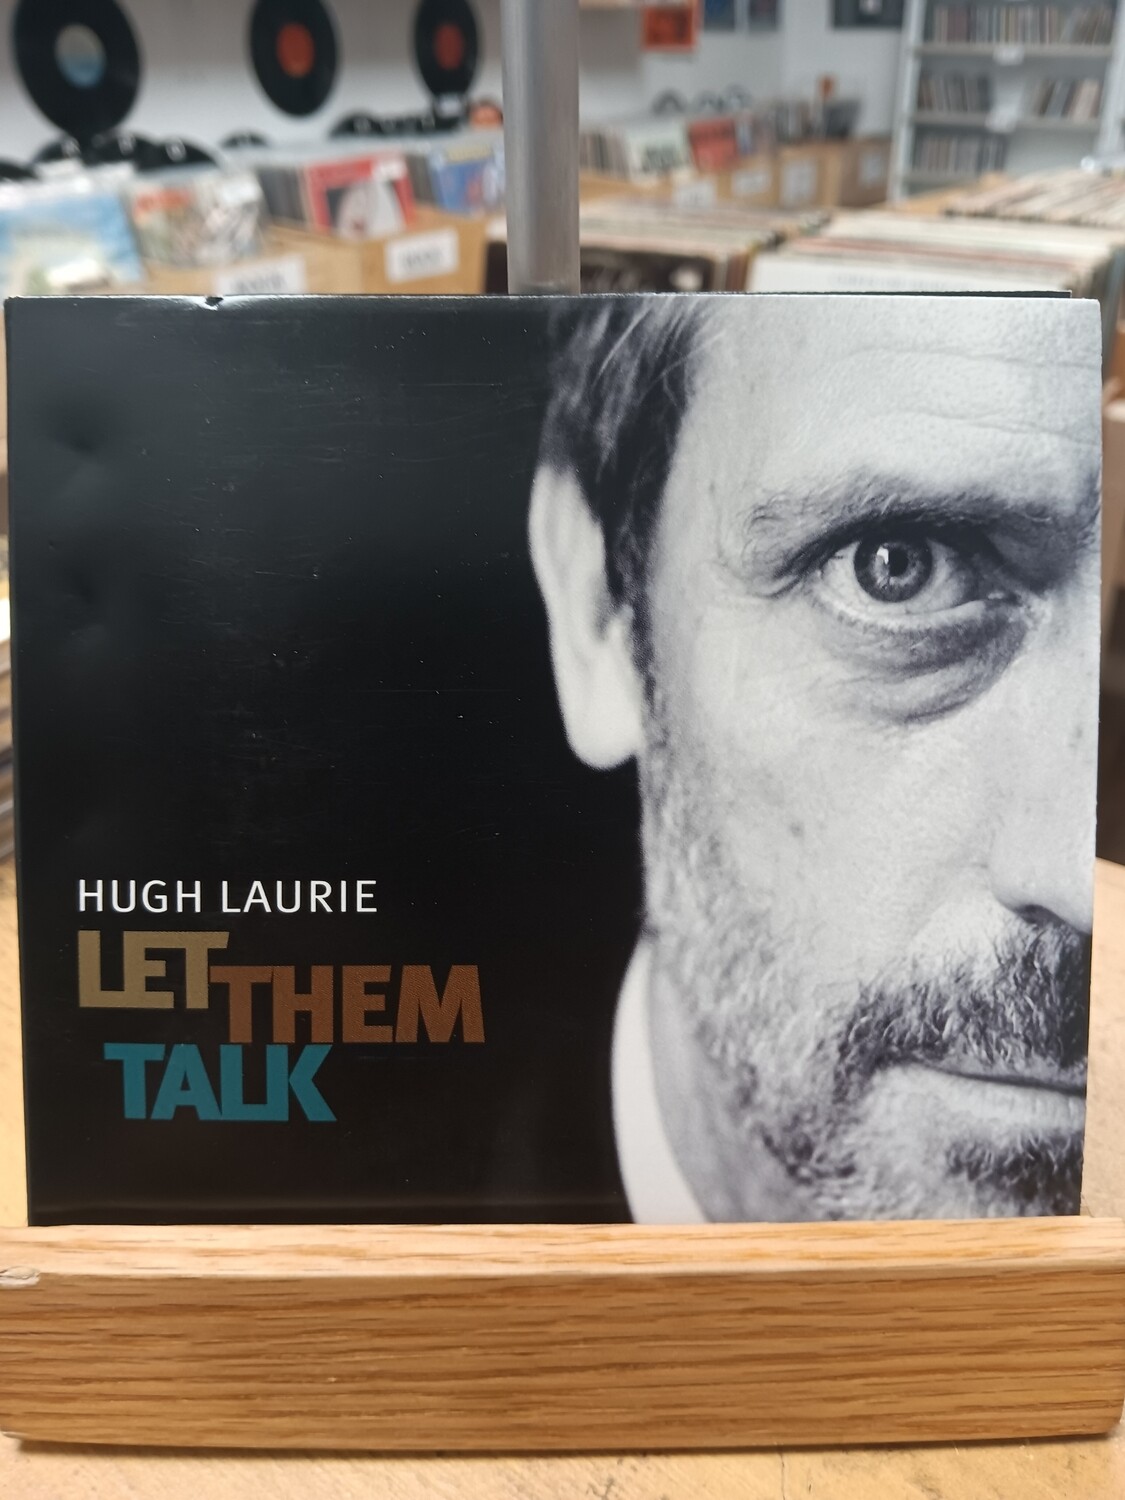 HUGH LAURIE - Let them talk (CD)